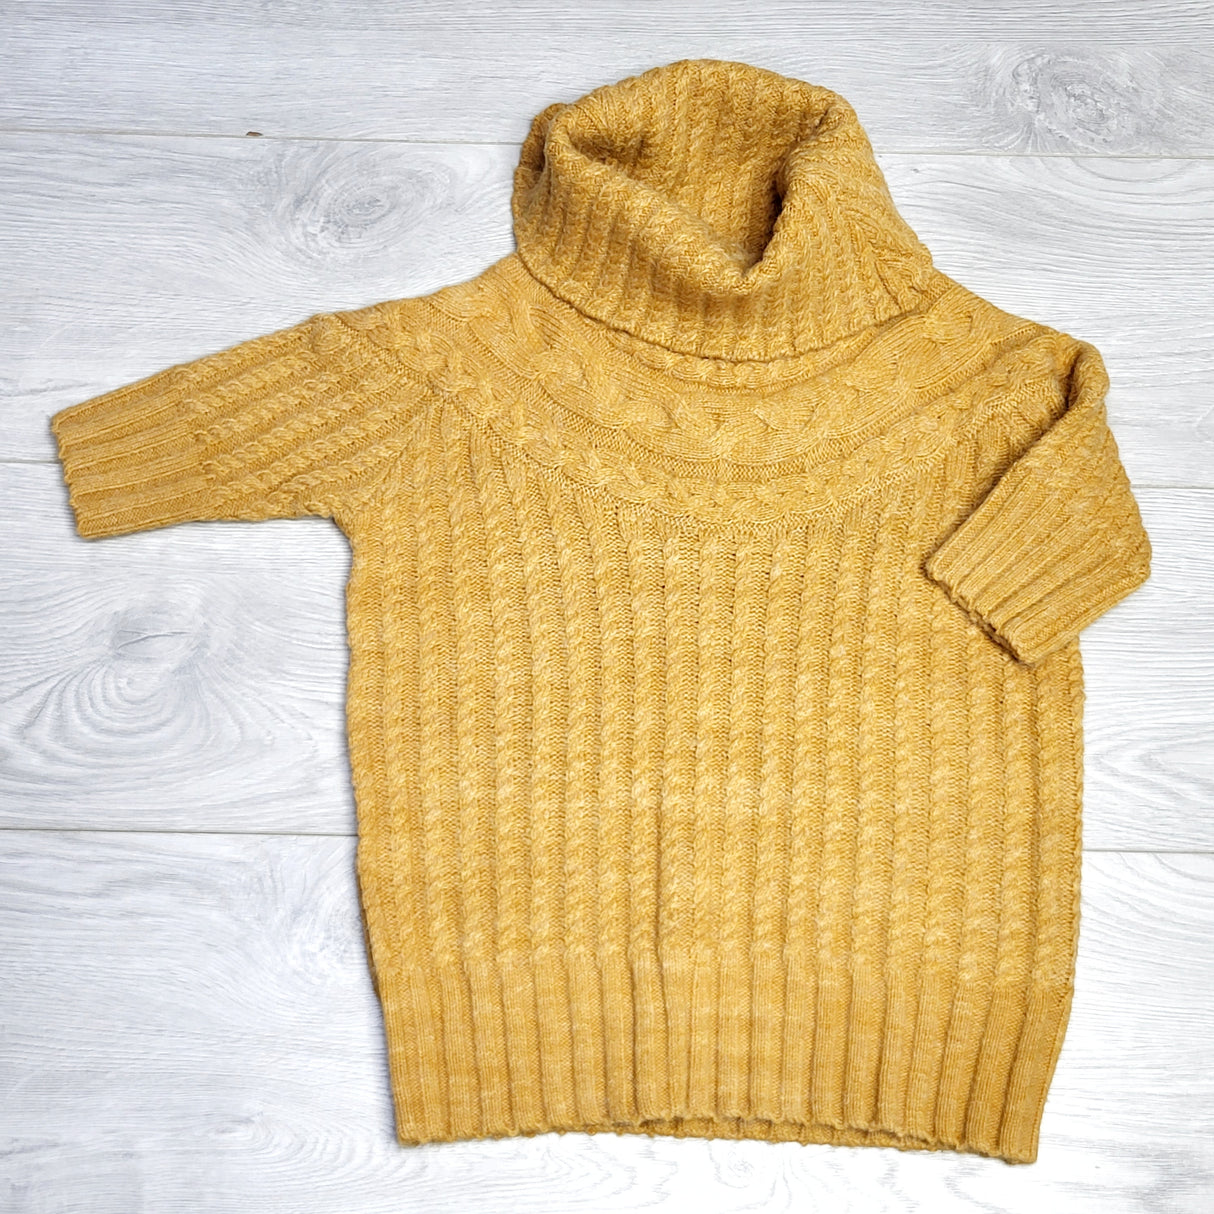 HWIL1 - Vingnette yellow "Samantha" sweater. Size 5T